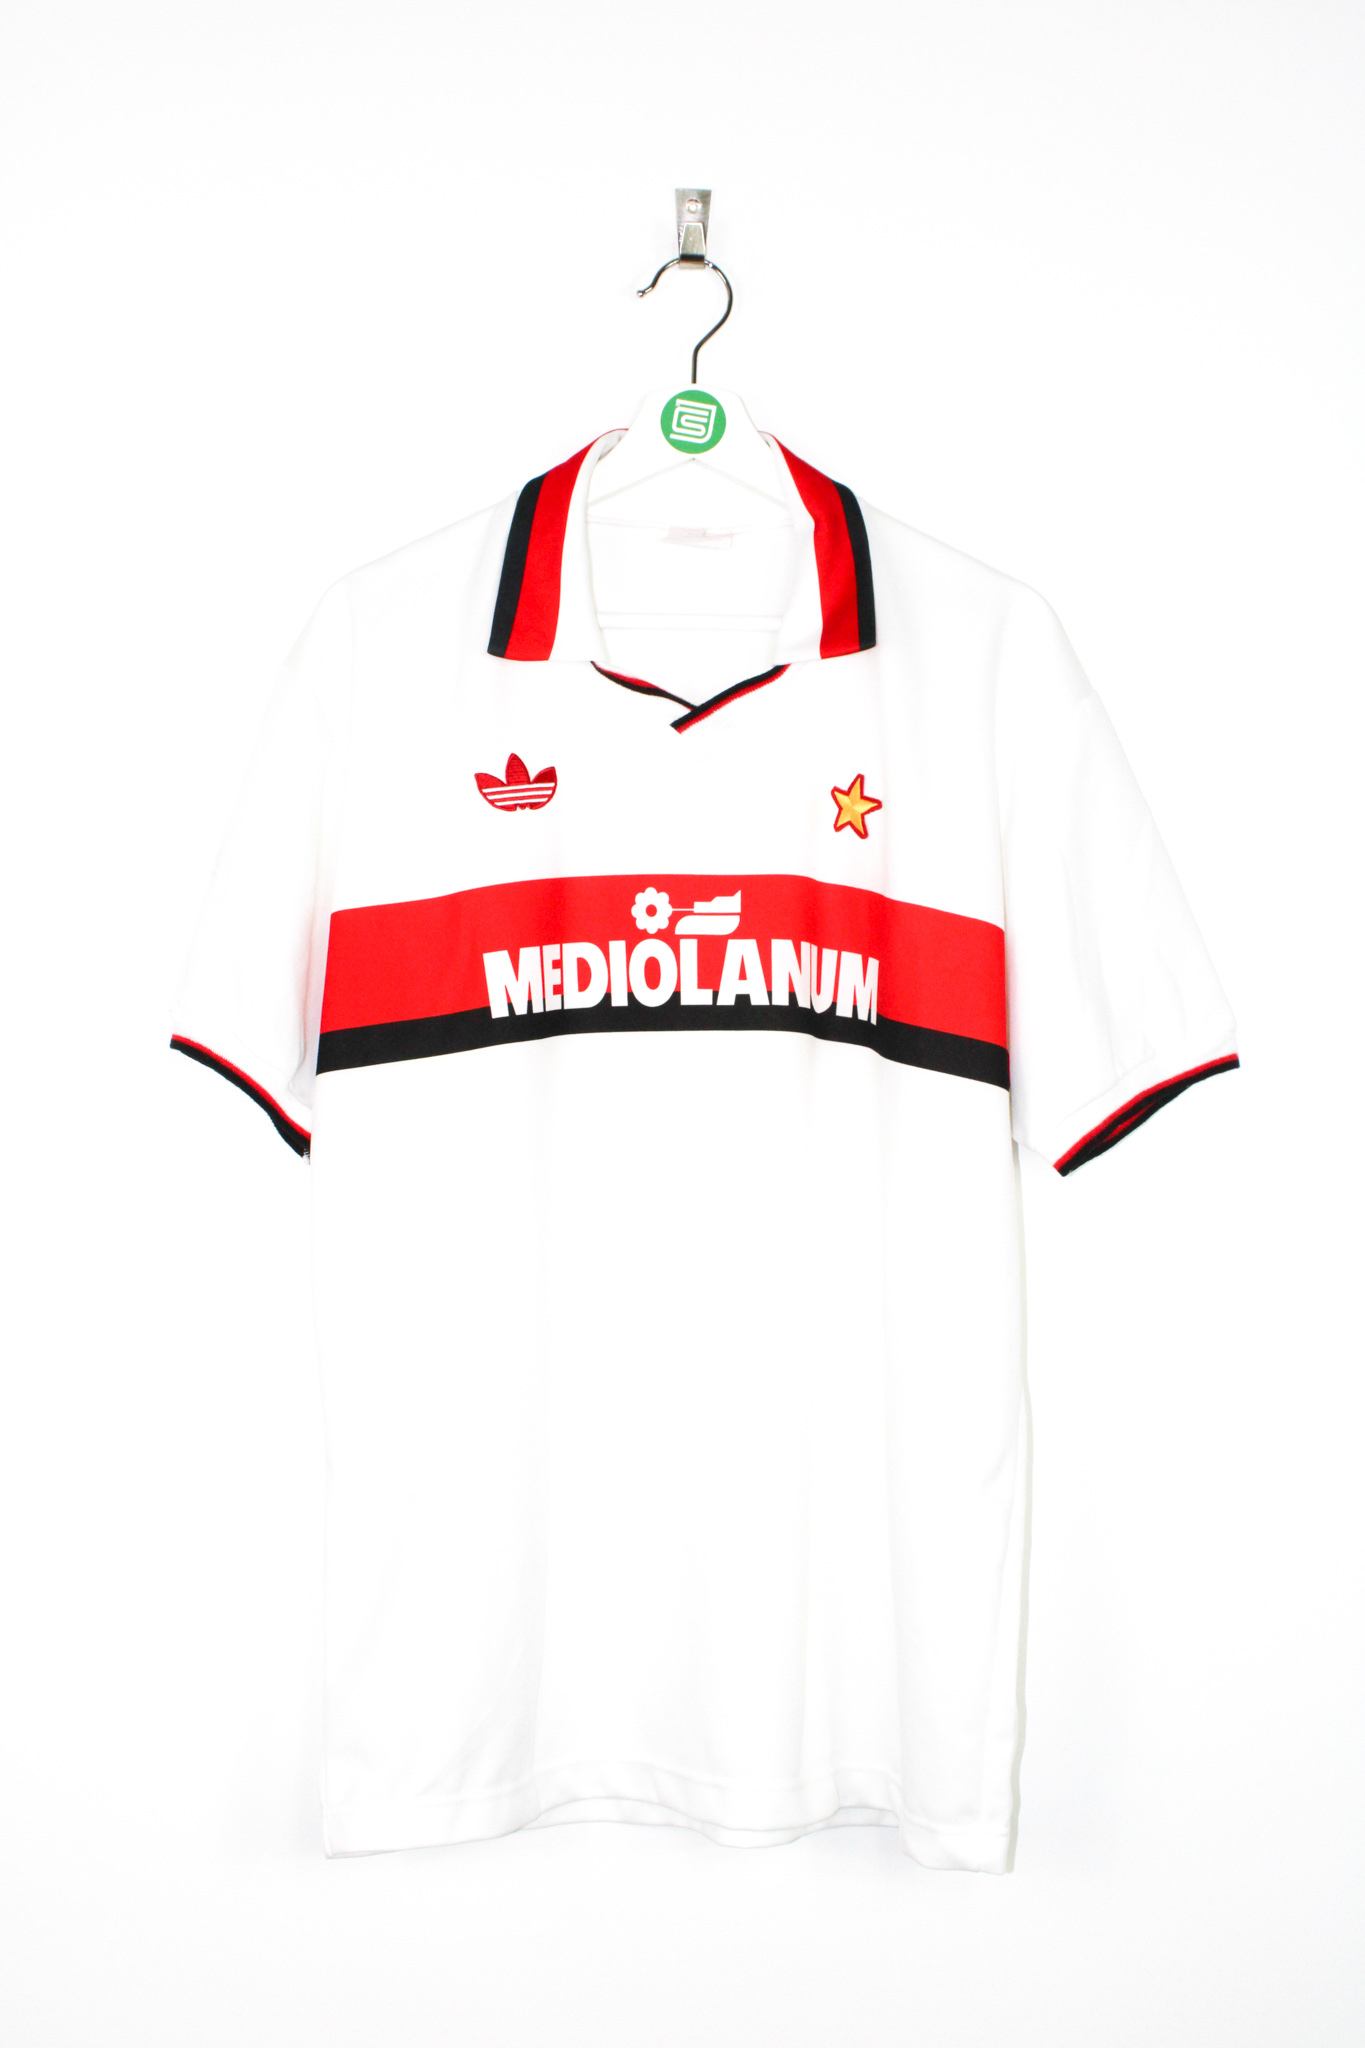 NWT Adidas XL MEDIOLANUM vintage 1990 Milan jersey